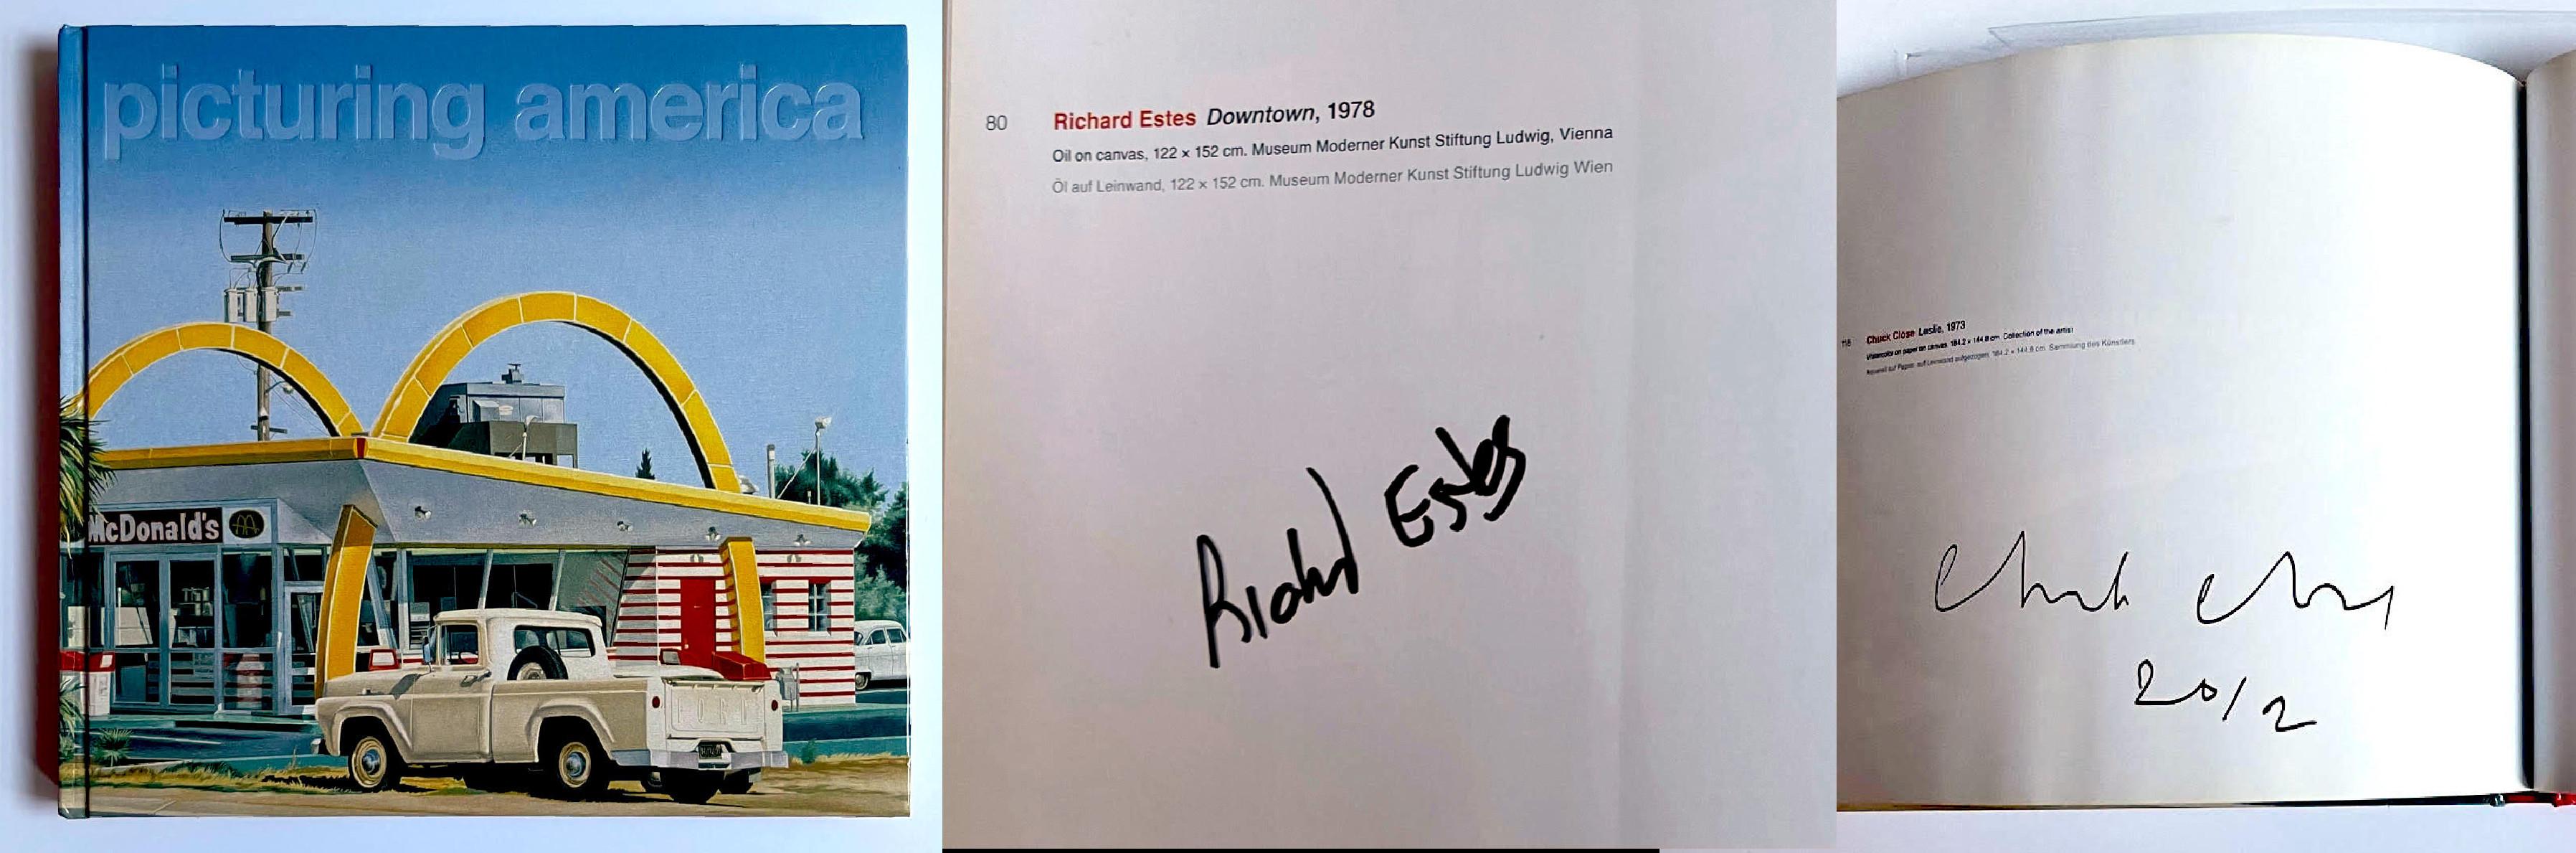 Chuck Close and Richard Estes Figurative Print – Picturing America (Monographie, handsigniert von Chuck Close und Richard Estes)